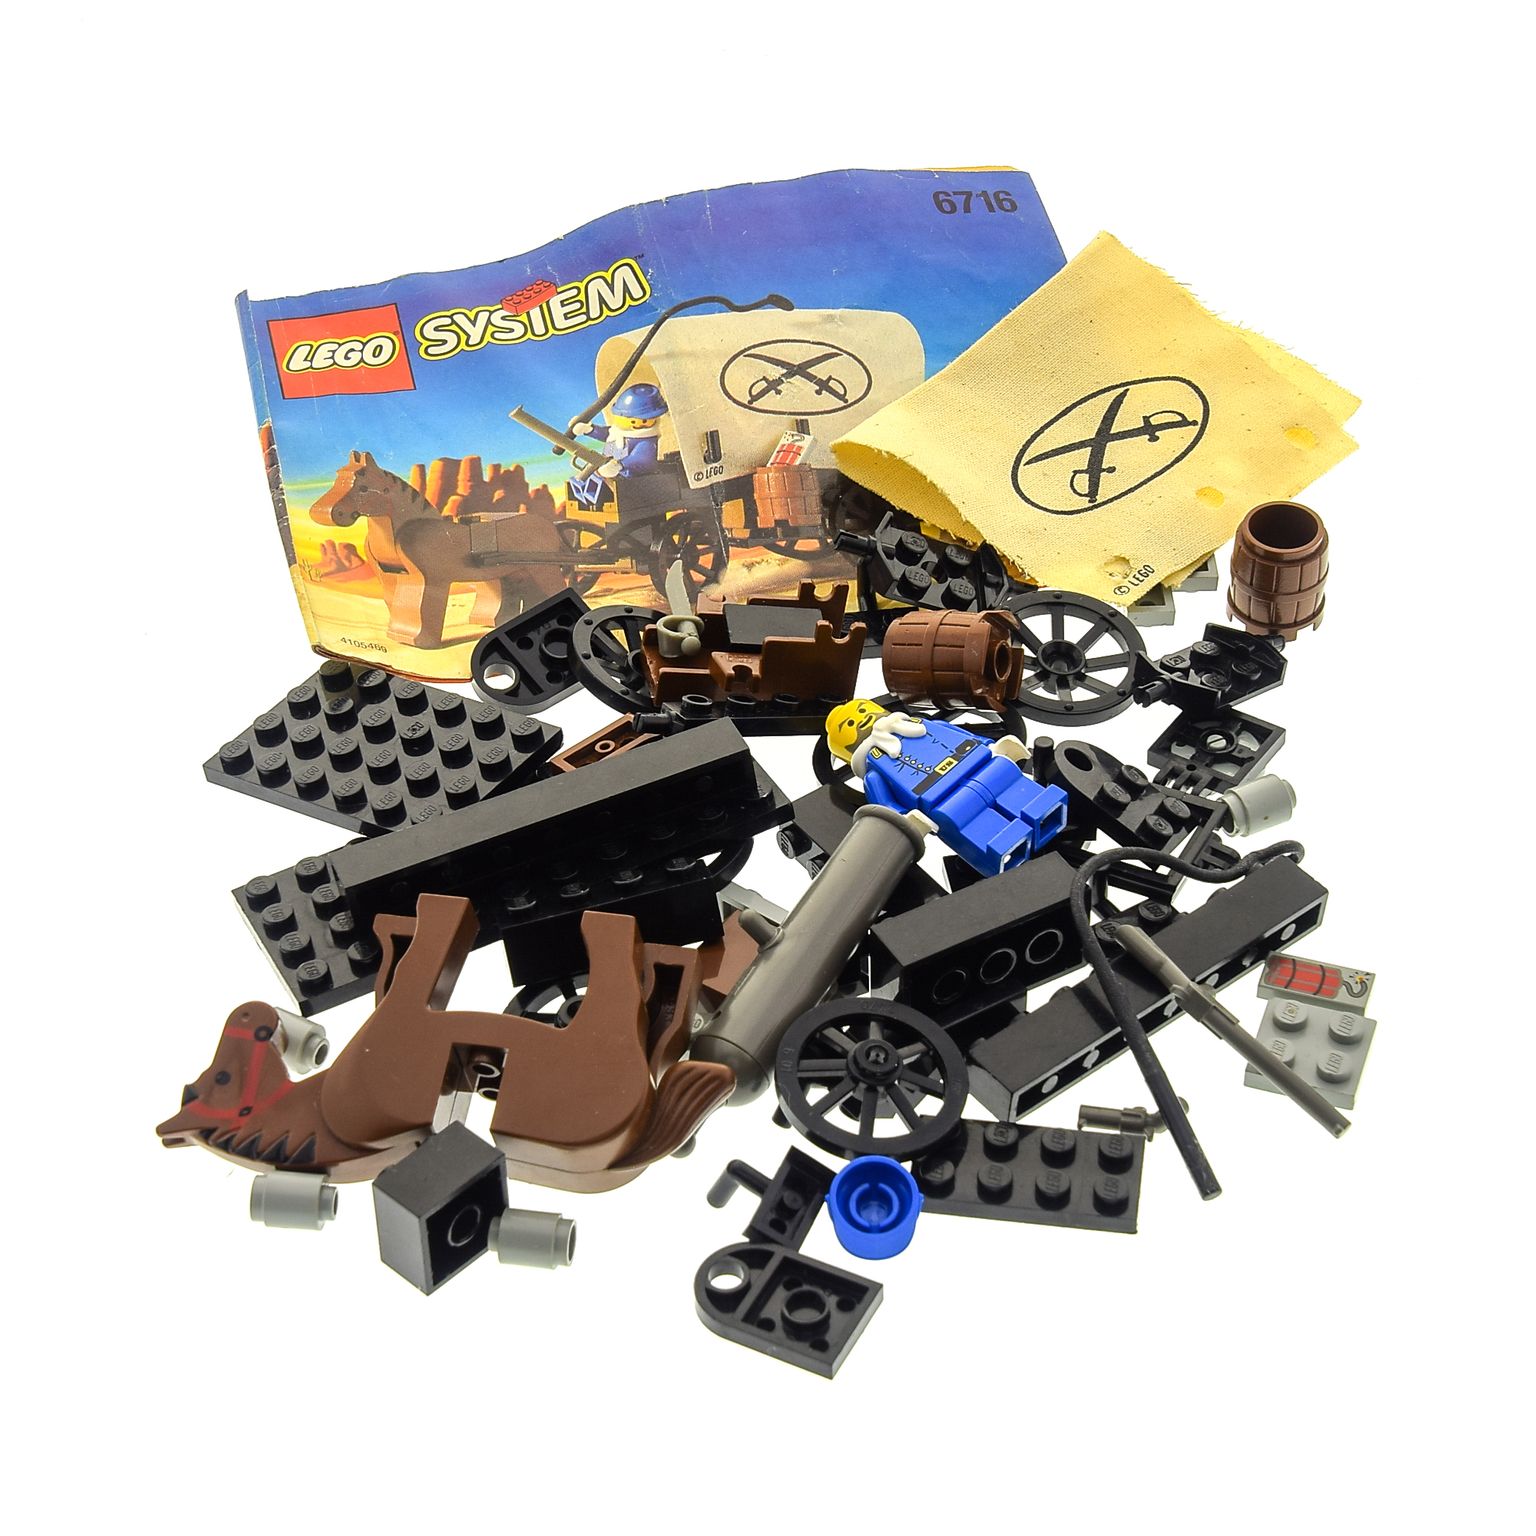 1 X Lego System Set Modell 6716 Western Cowboys Weapons Wagon Unvollstandig Steinpalast